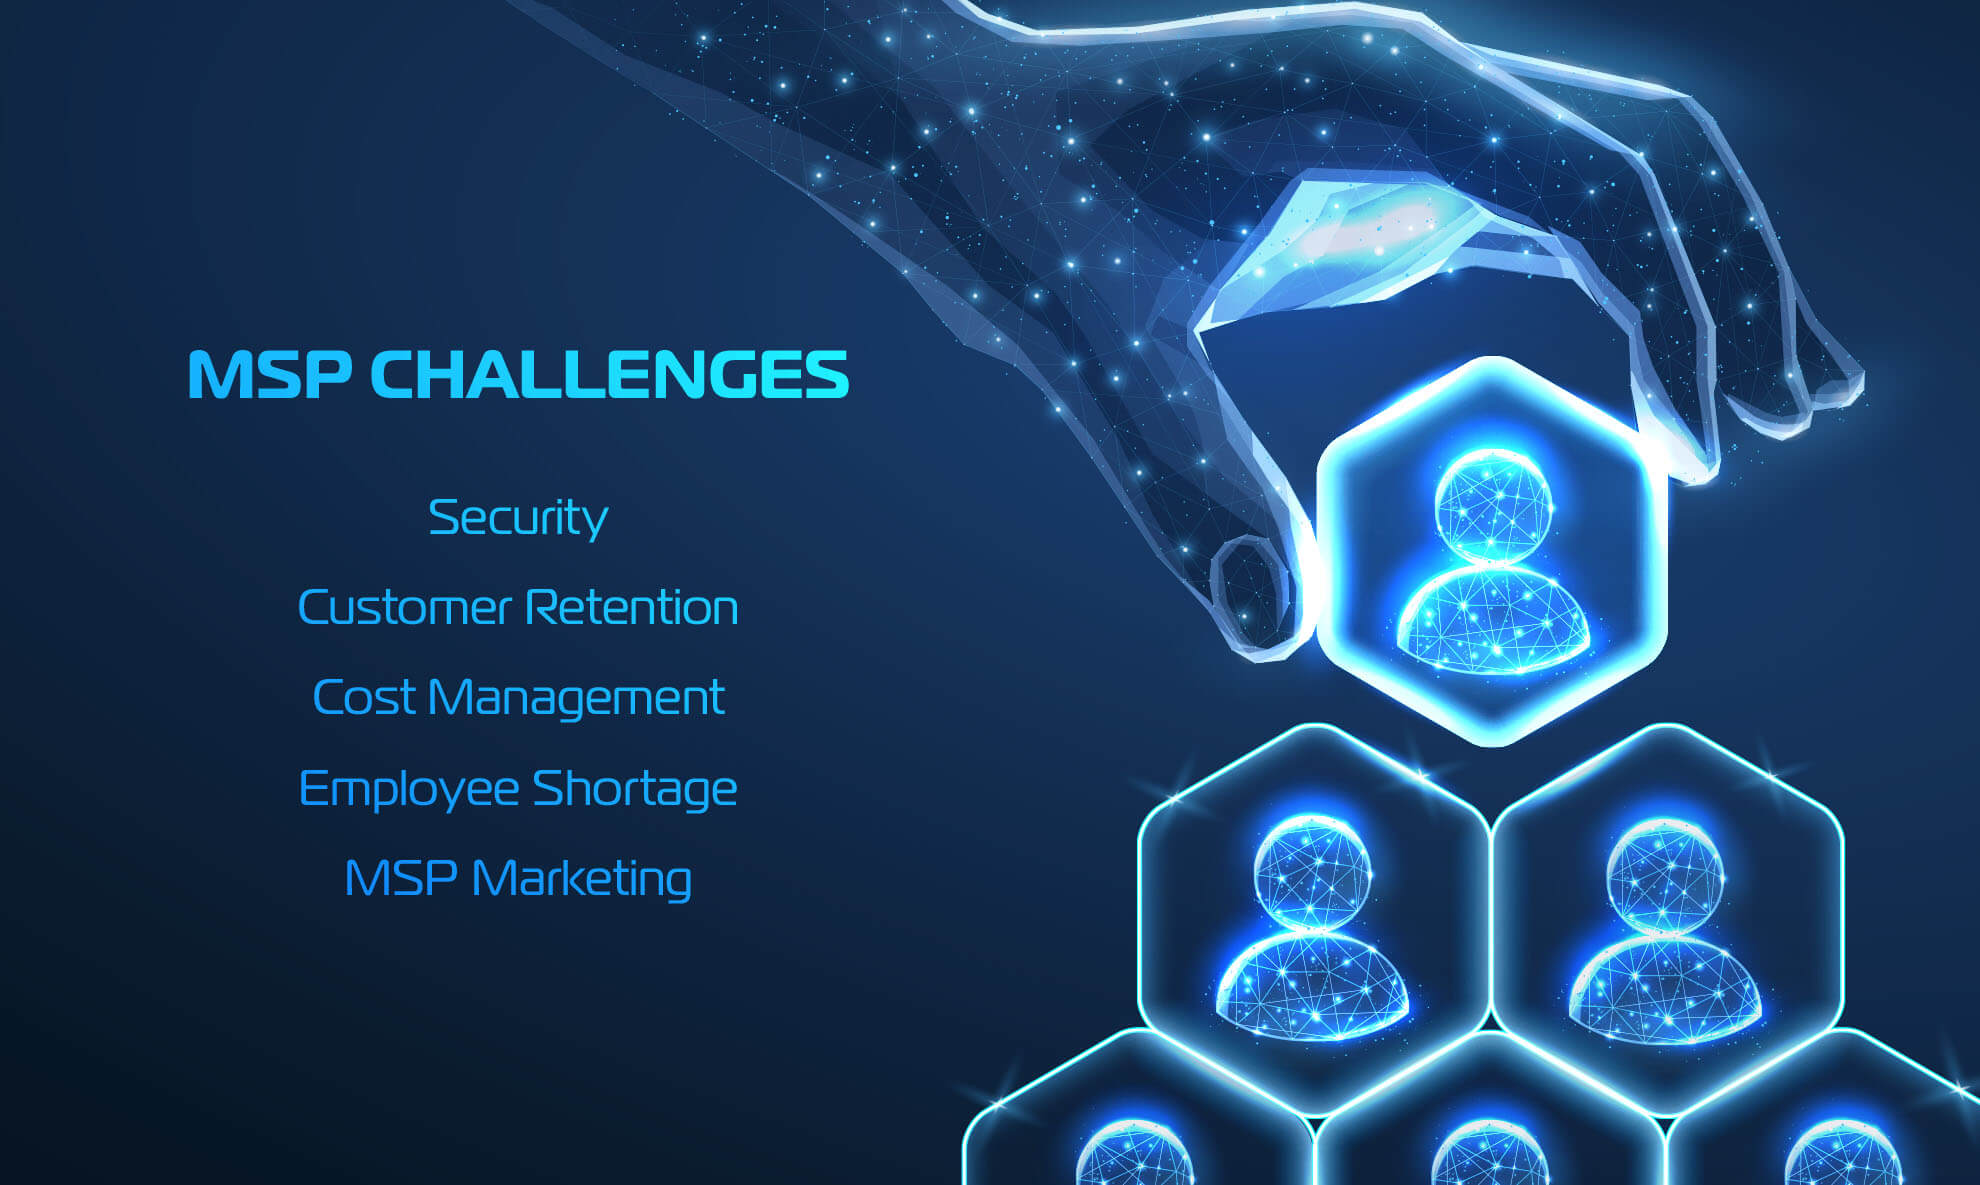 MSP challenges